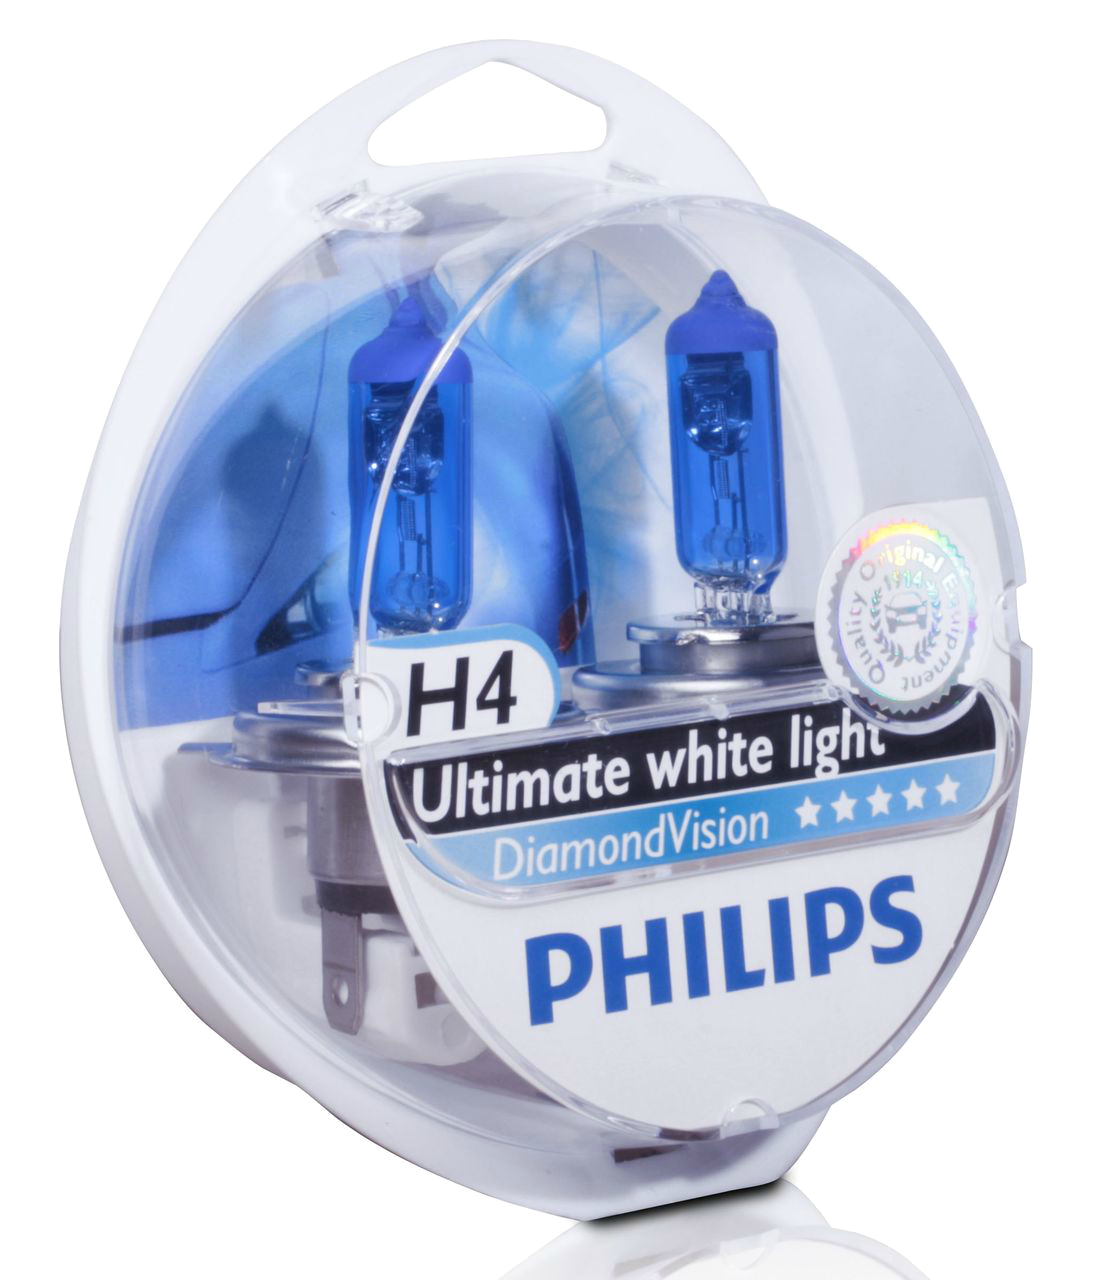 Philips 12v h4. Лампы Philips h4 55\60w-12v Diamond Vision 5000k. H4 Philips 12342dvs2. Philips 12v h4 60/55w Diamond Vision. Лампа h4 12v 60/55w Philips.